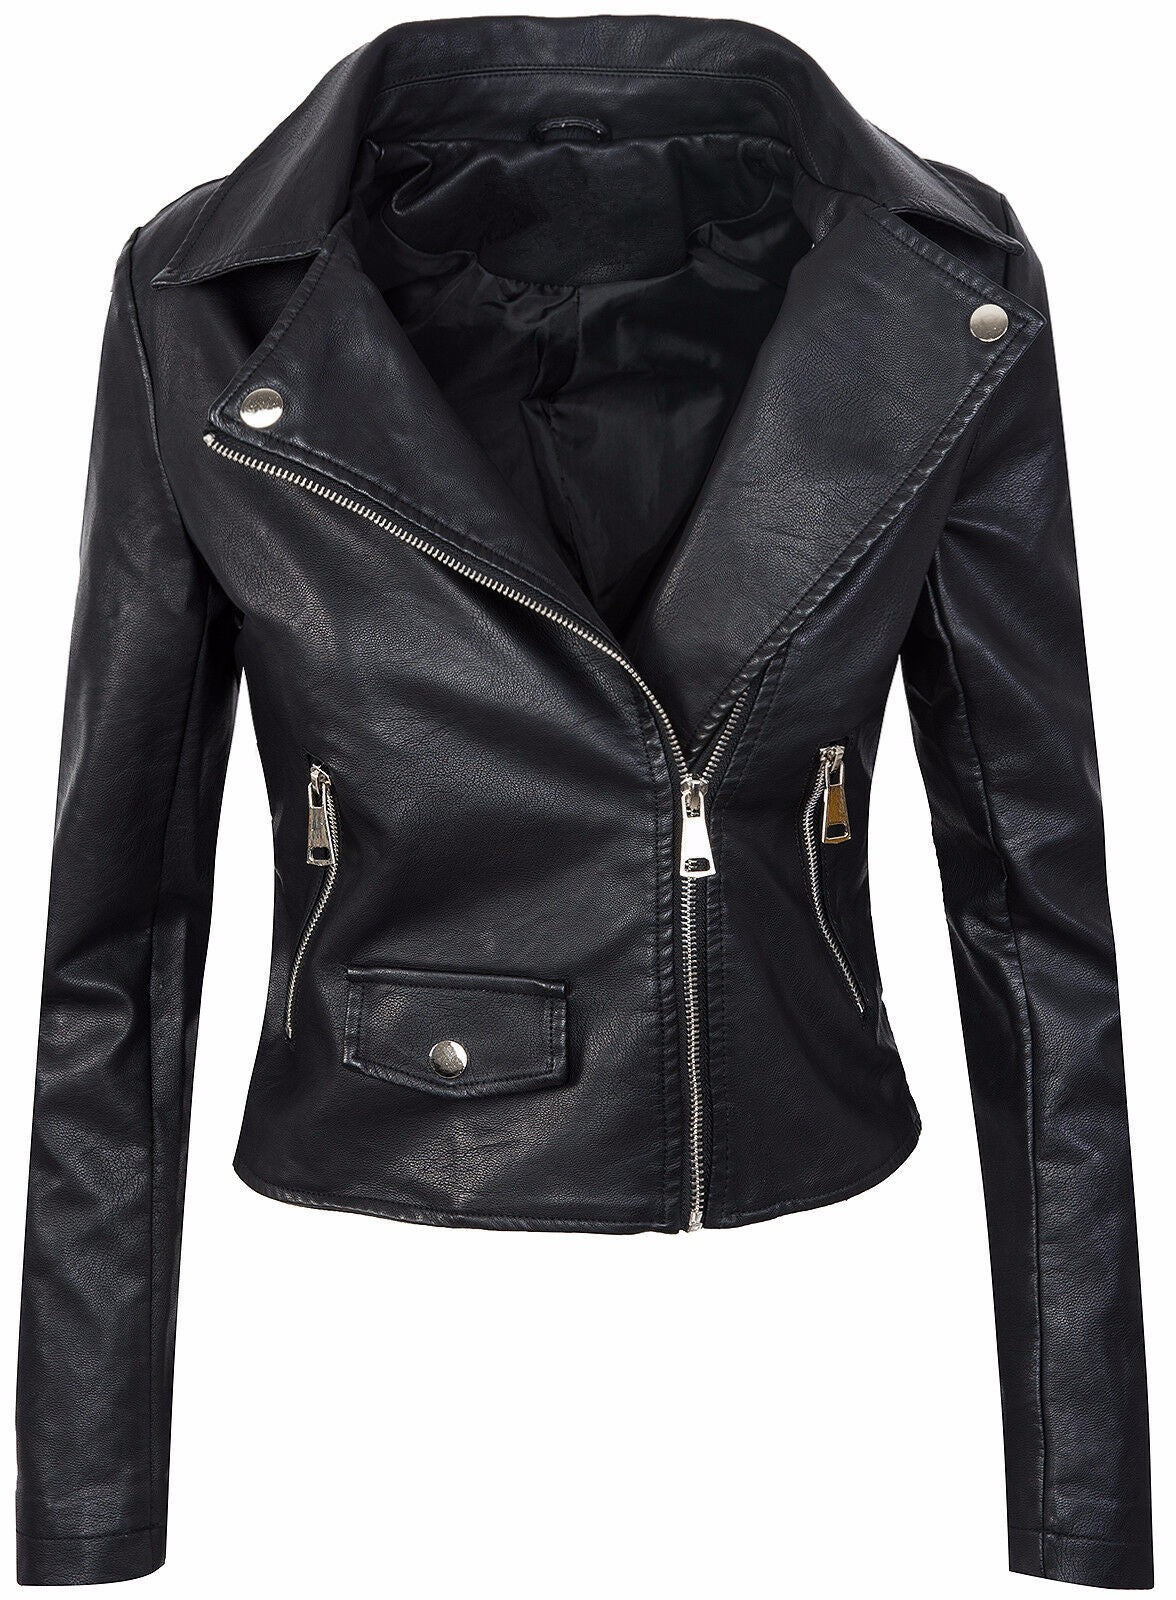 Women's Fall Winter Coat Slim PU Leather Short Zipper Jacket